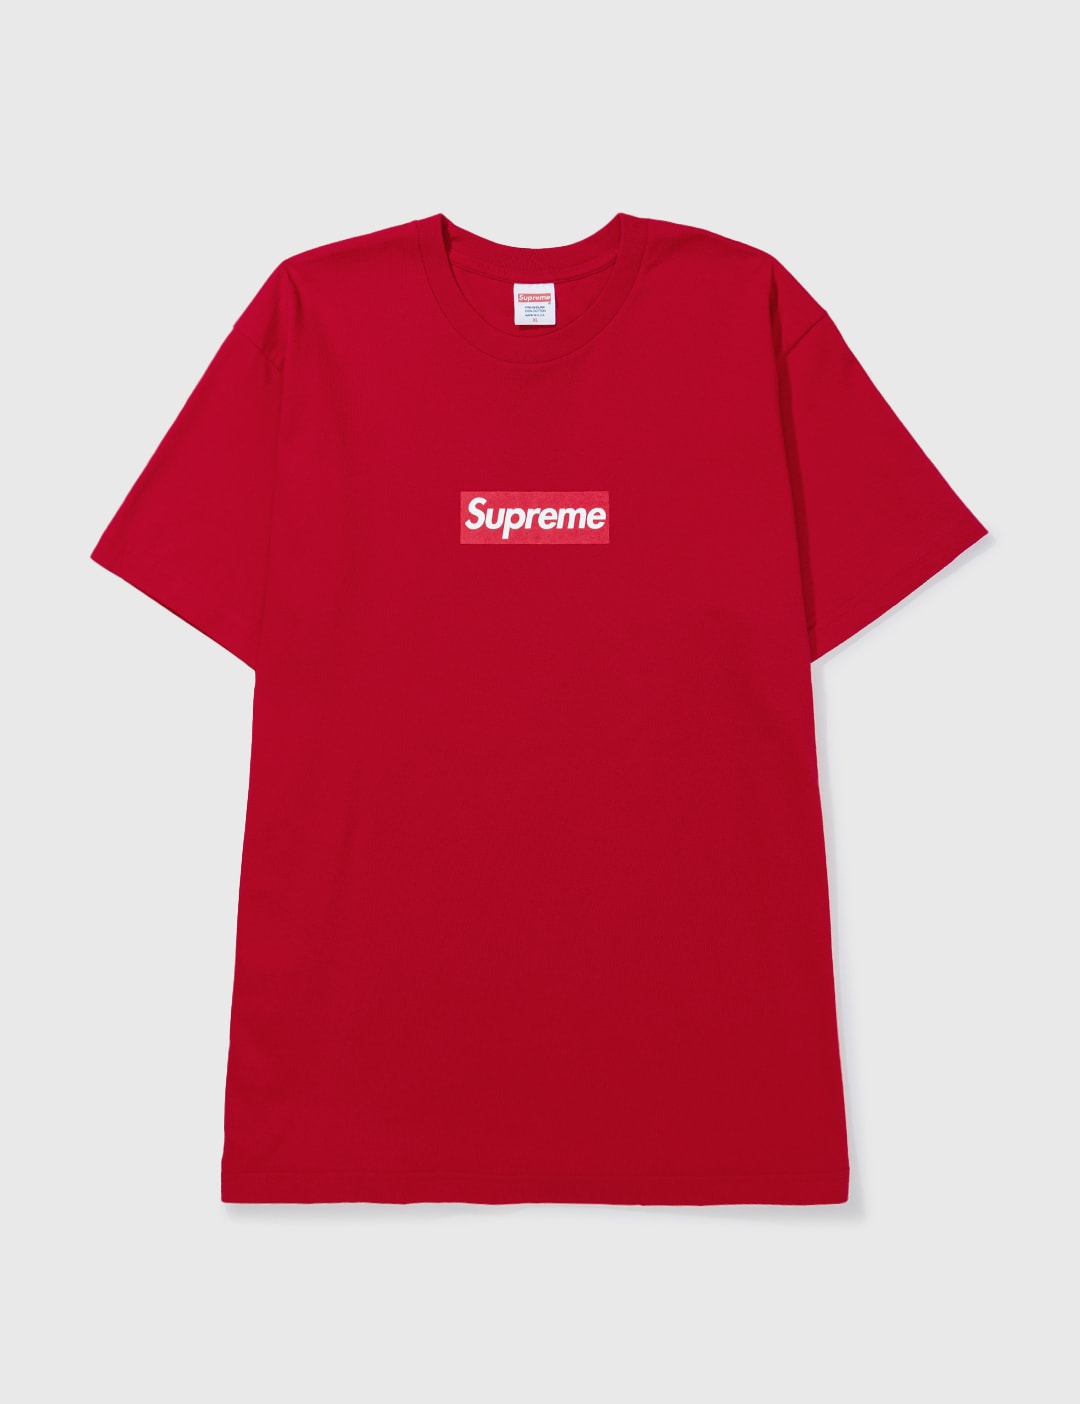 box logo supreme shirt